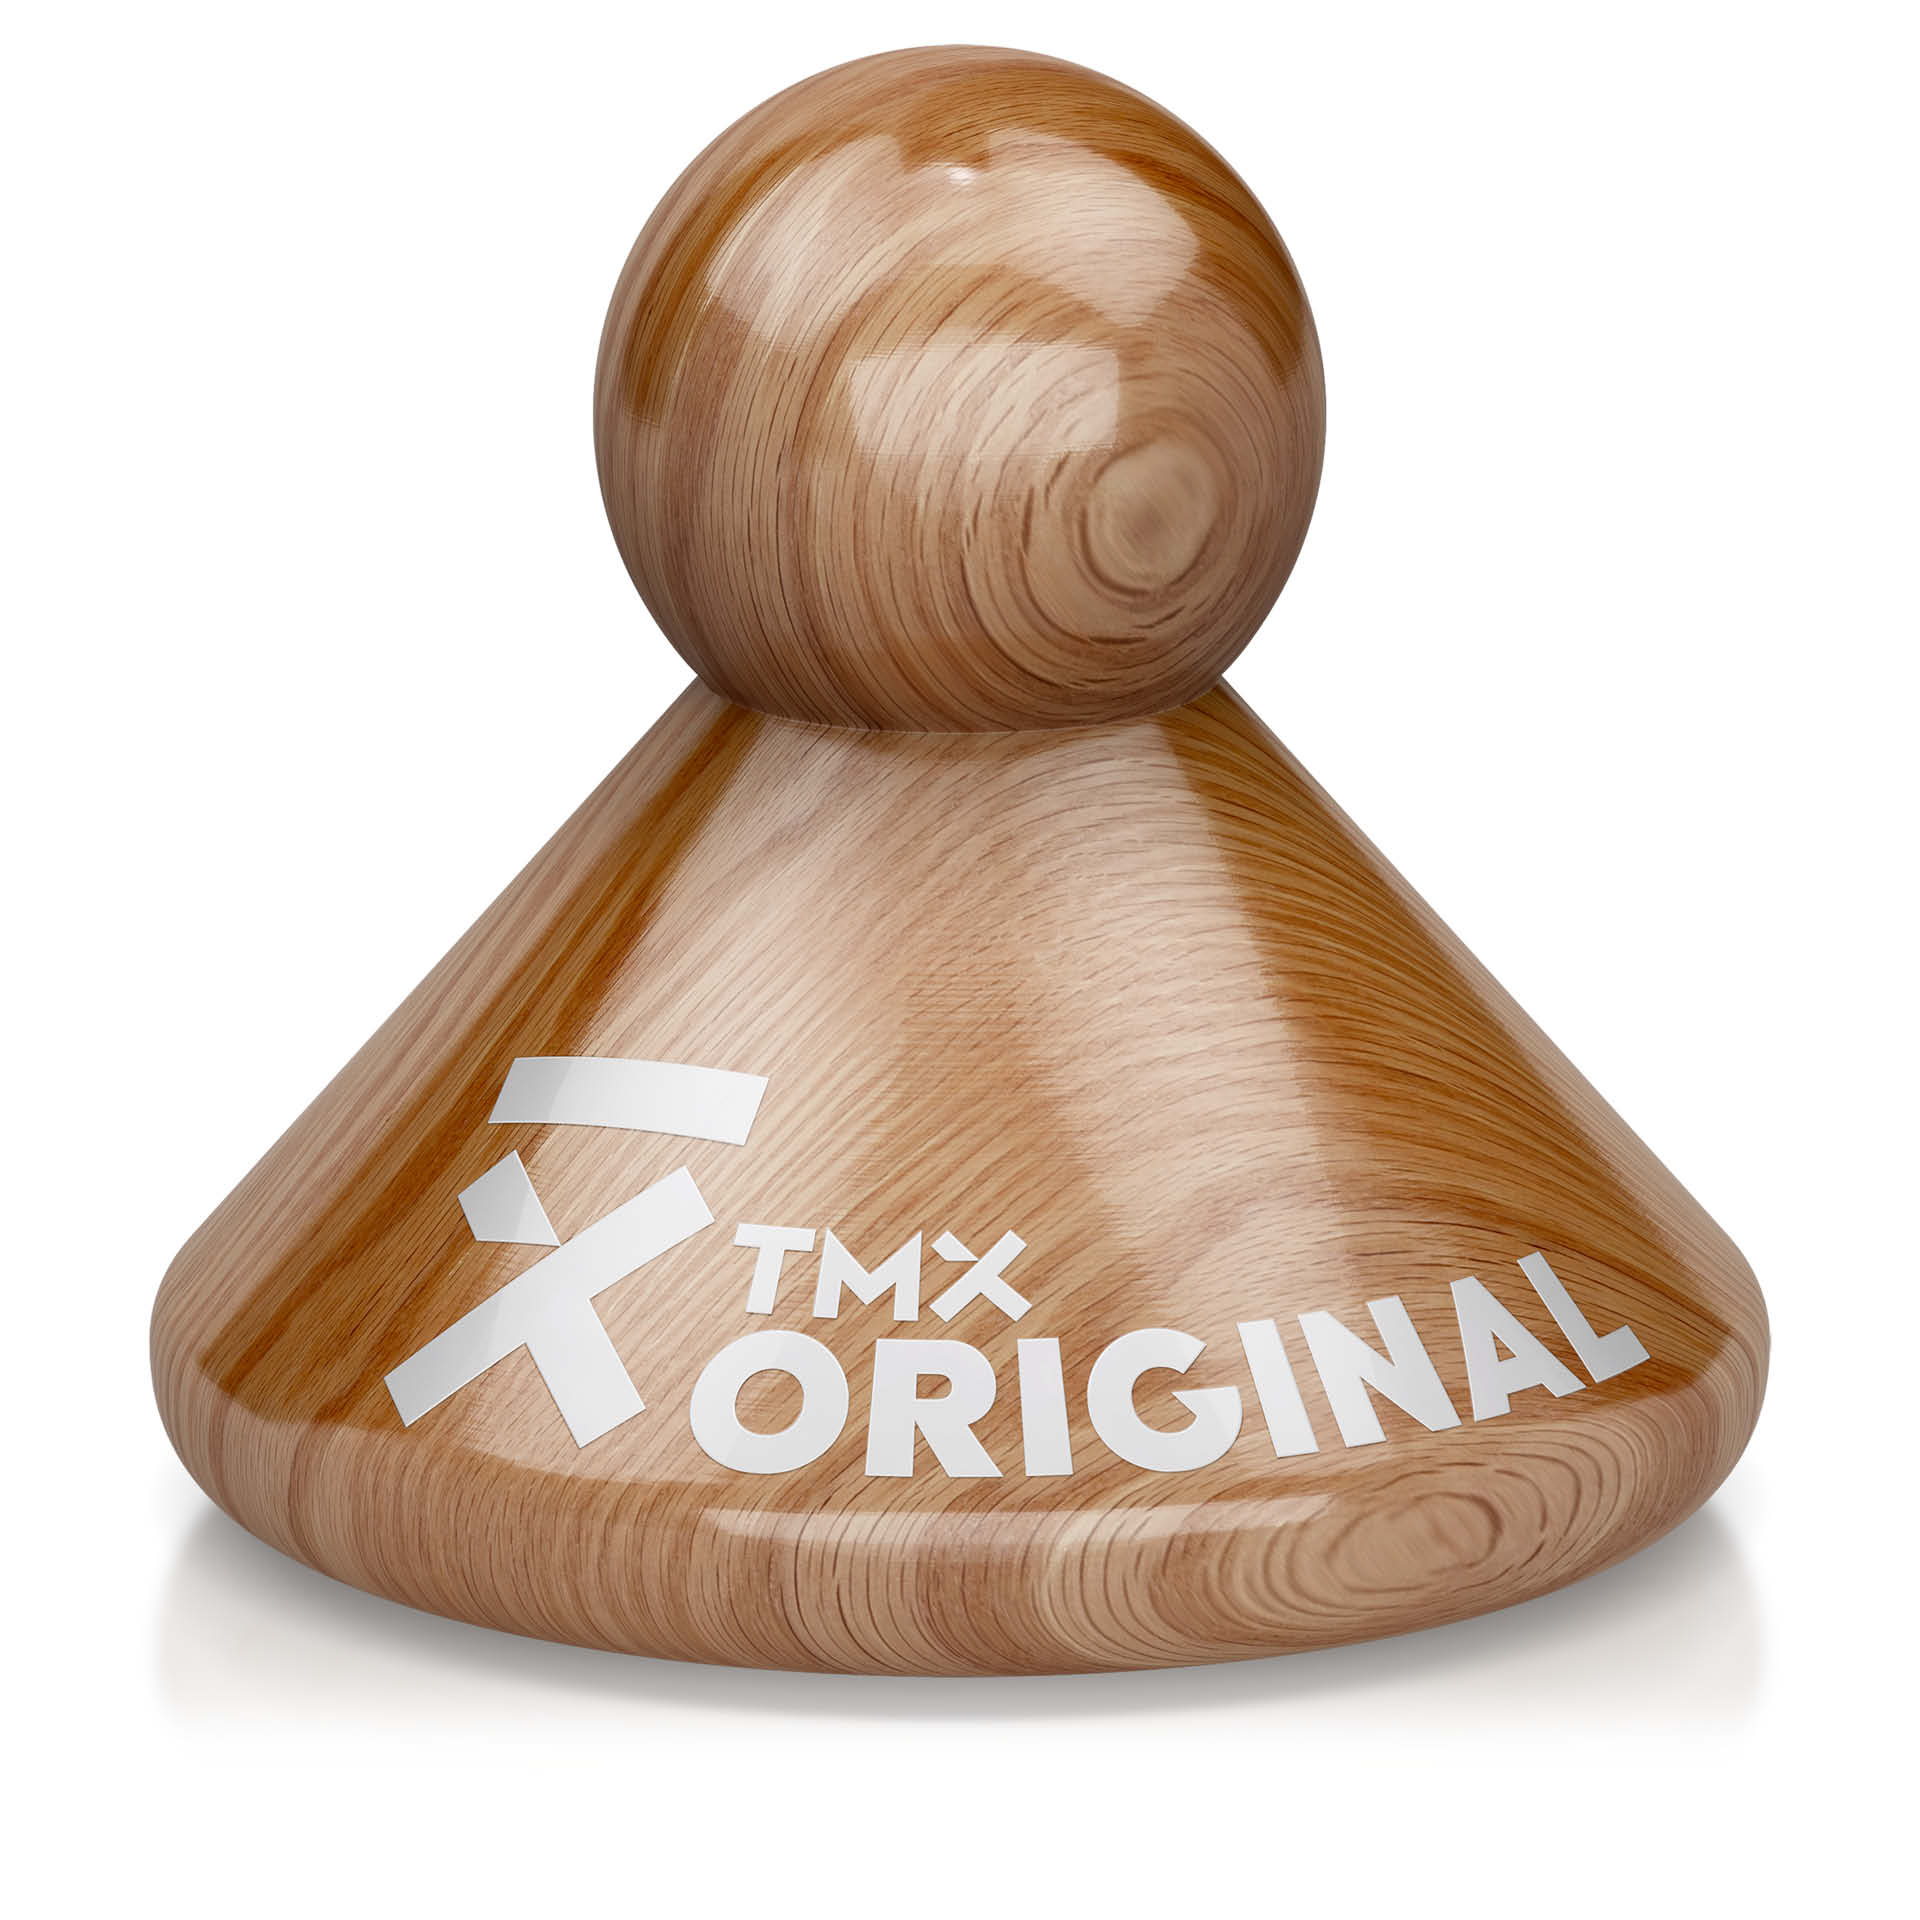 TMX® Original Trigger Buche Natur